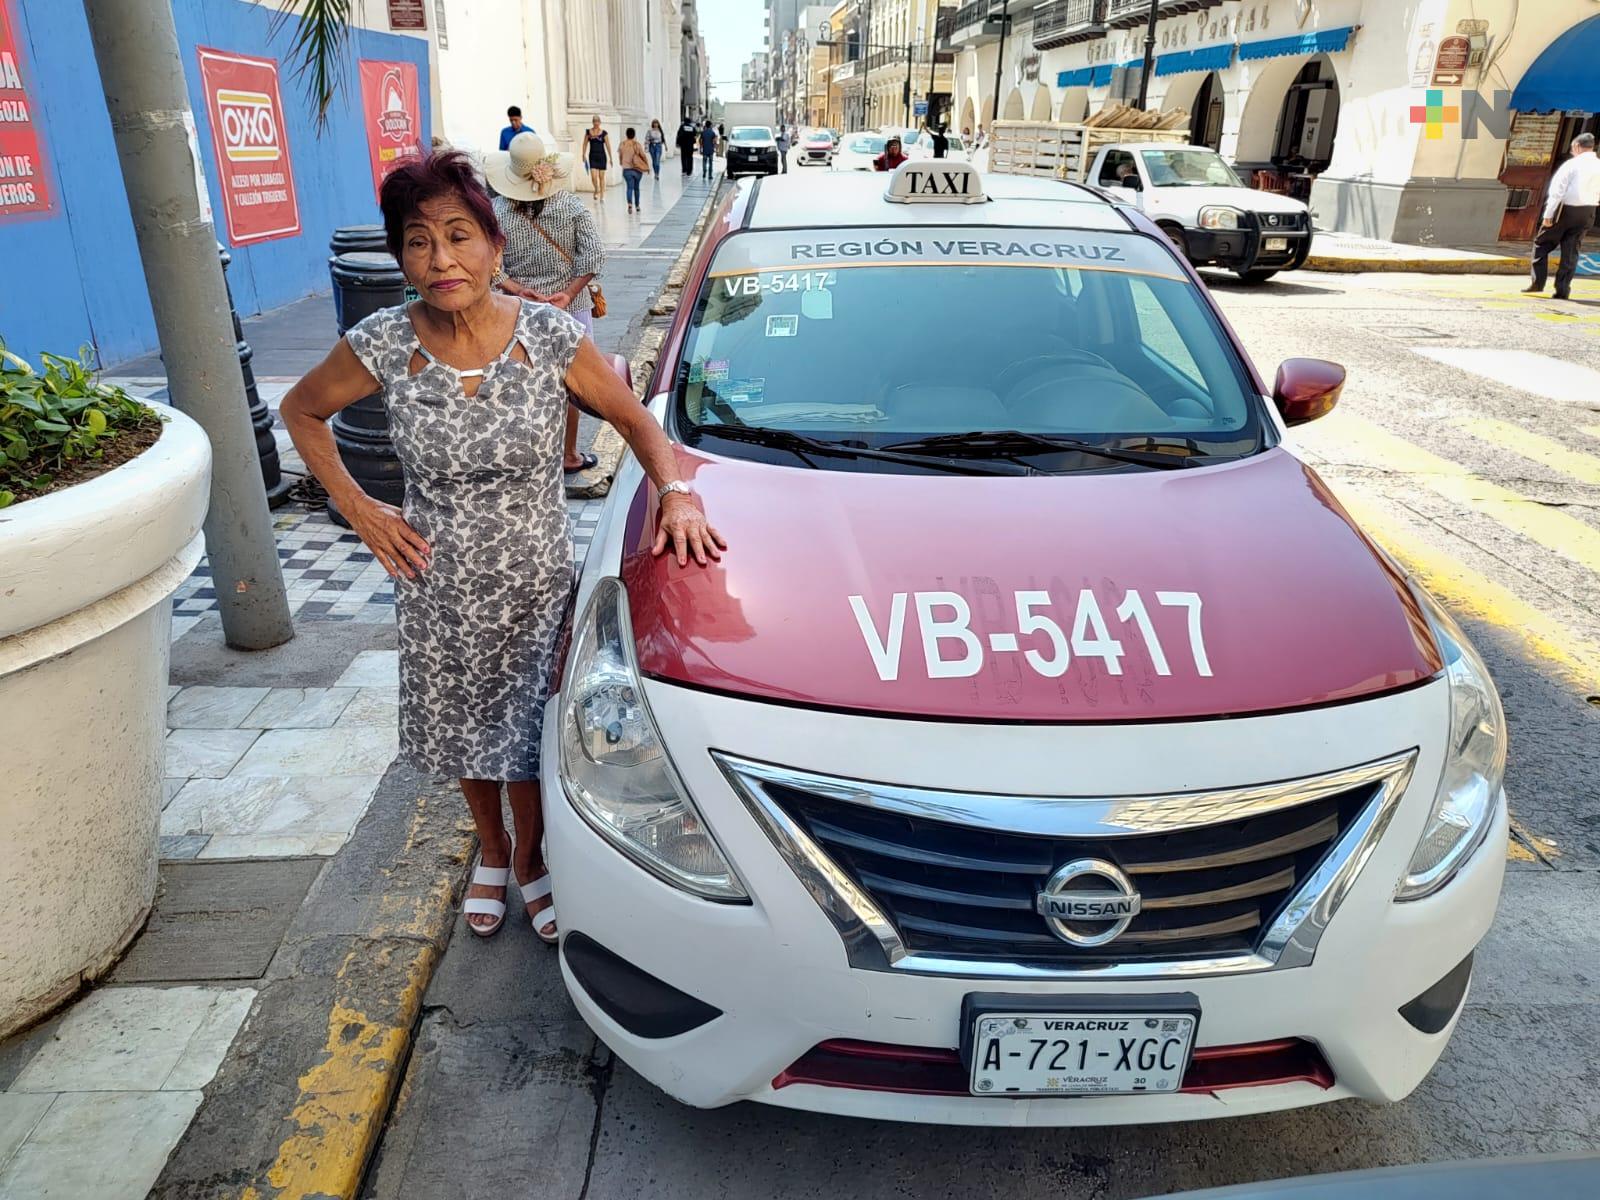 Con más de tres décadas de taxista, Alma Rosa recorre las calles